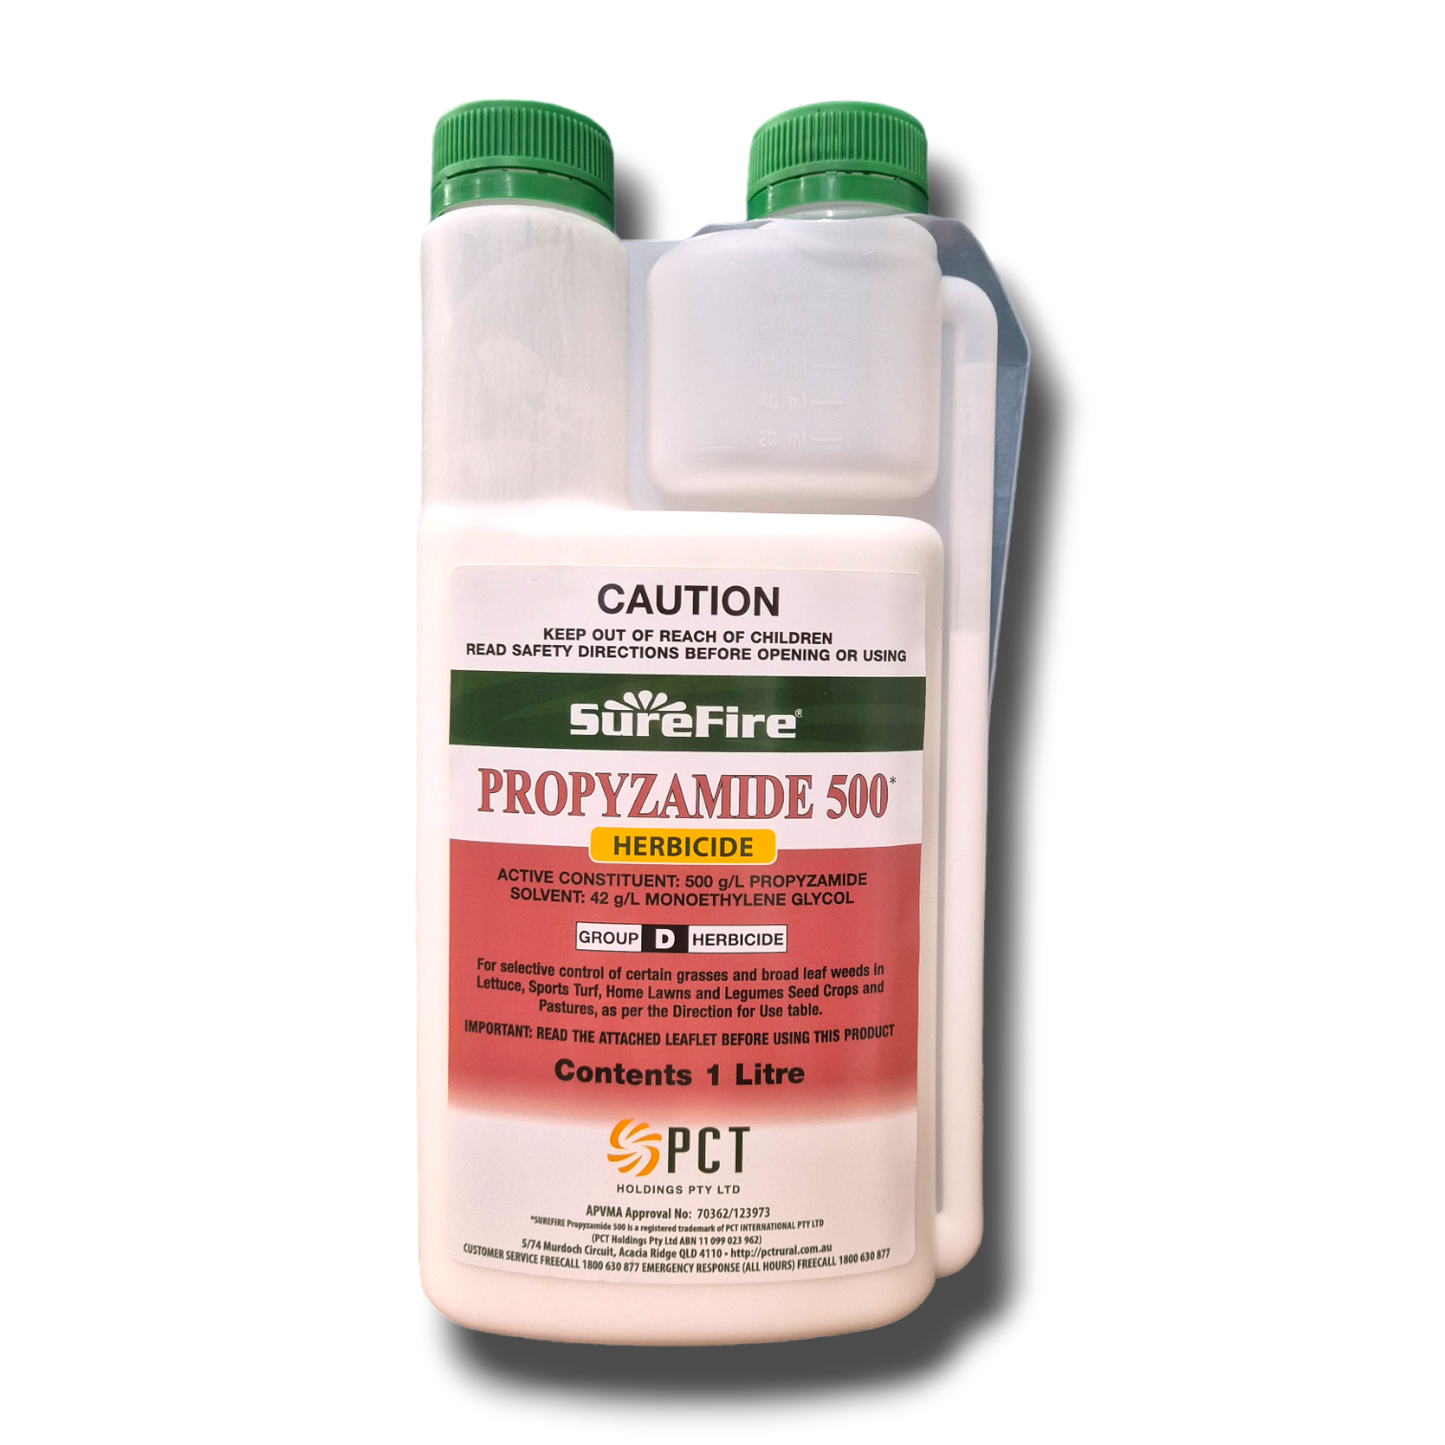 Surefire Propyzamide 500 SC Herbicide (winter grass killer)